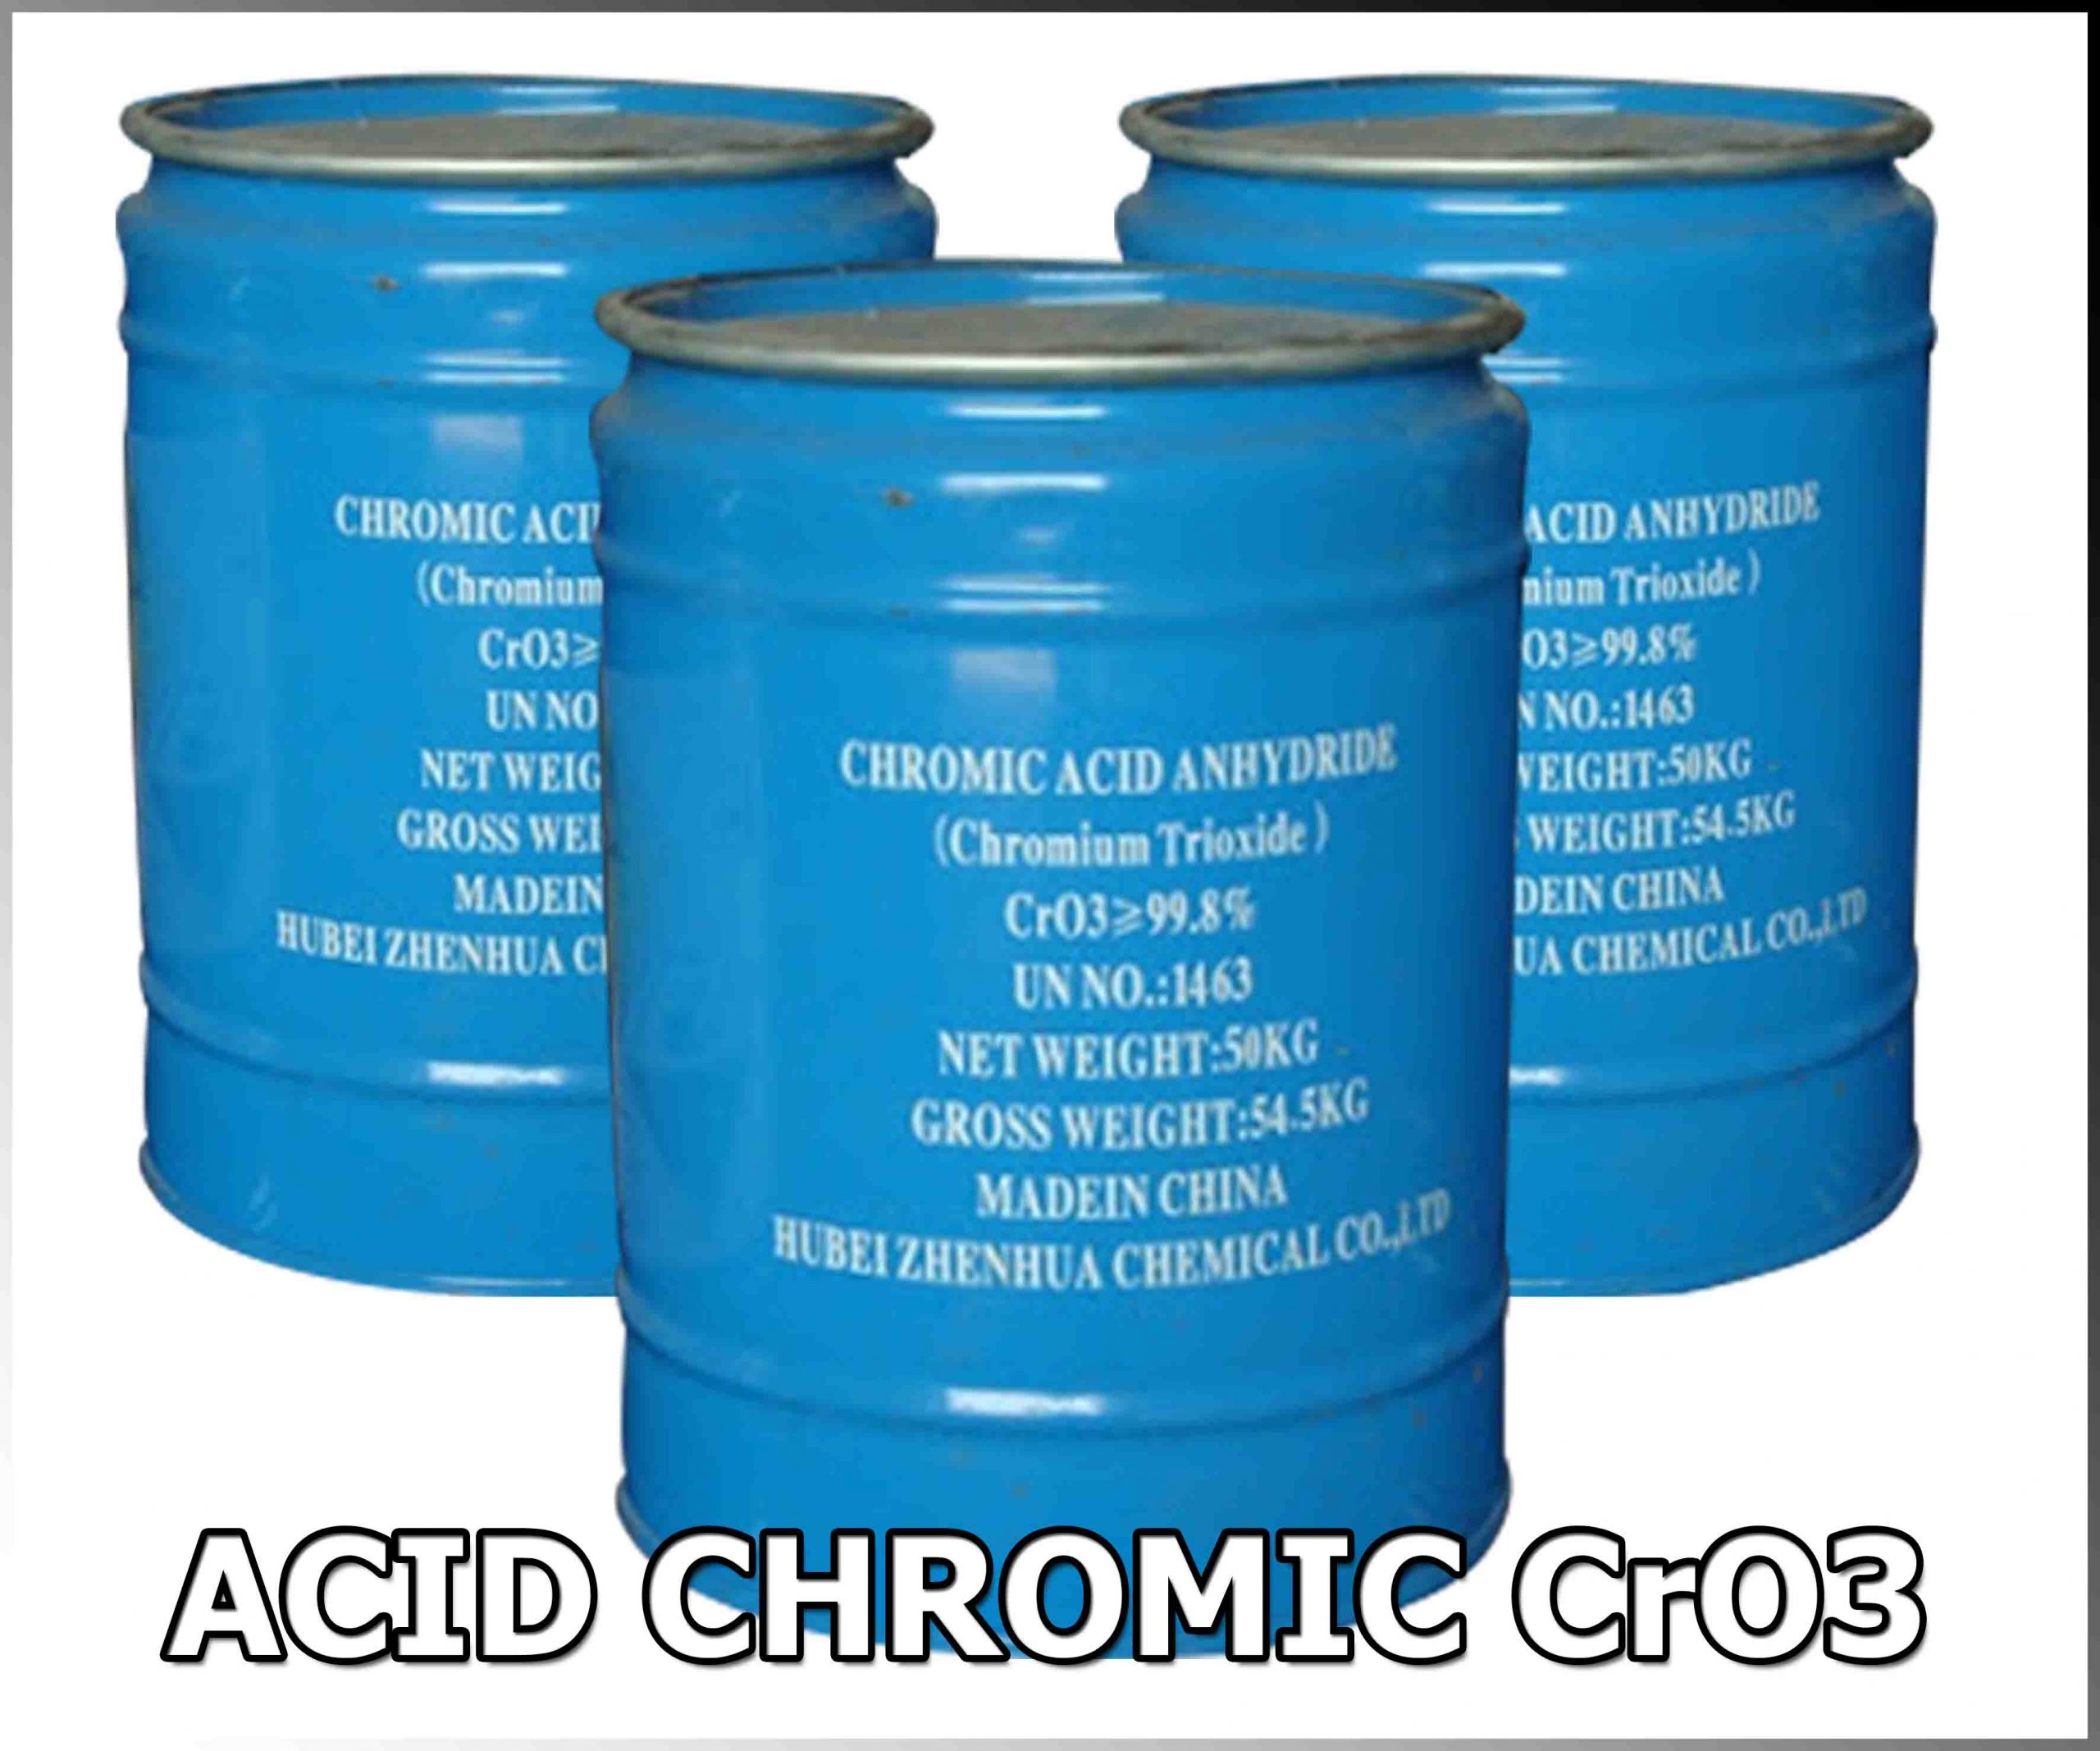 ACID CHROMIC CrO3